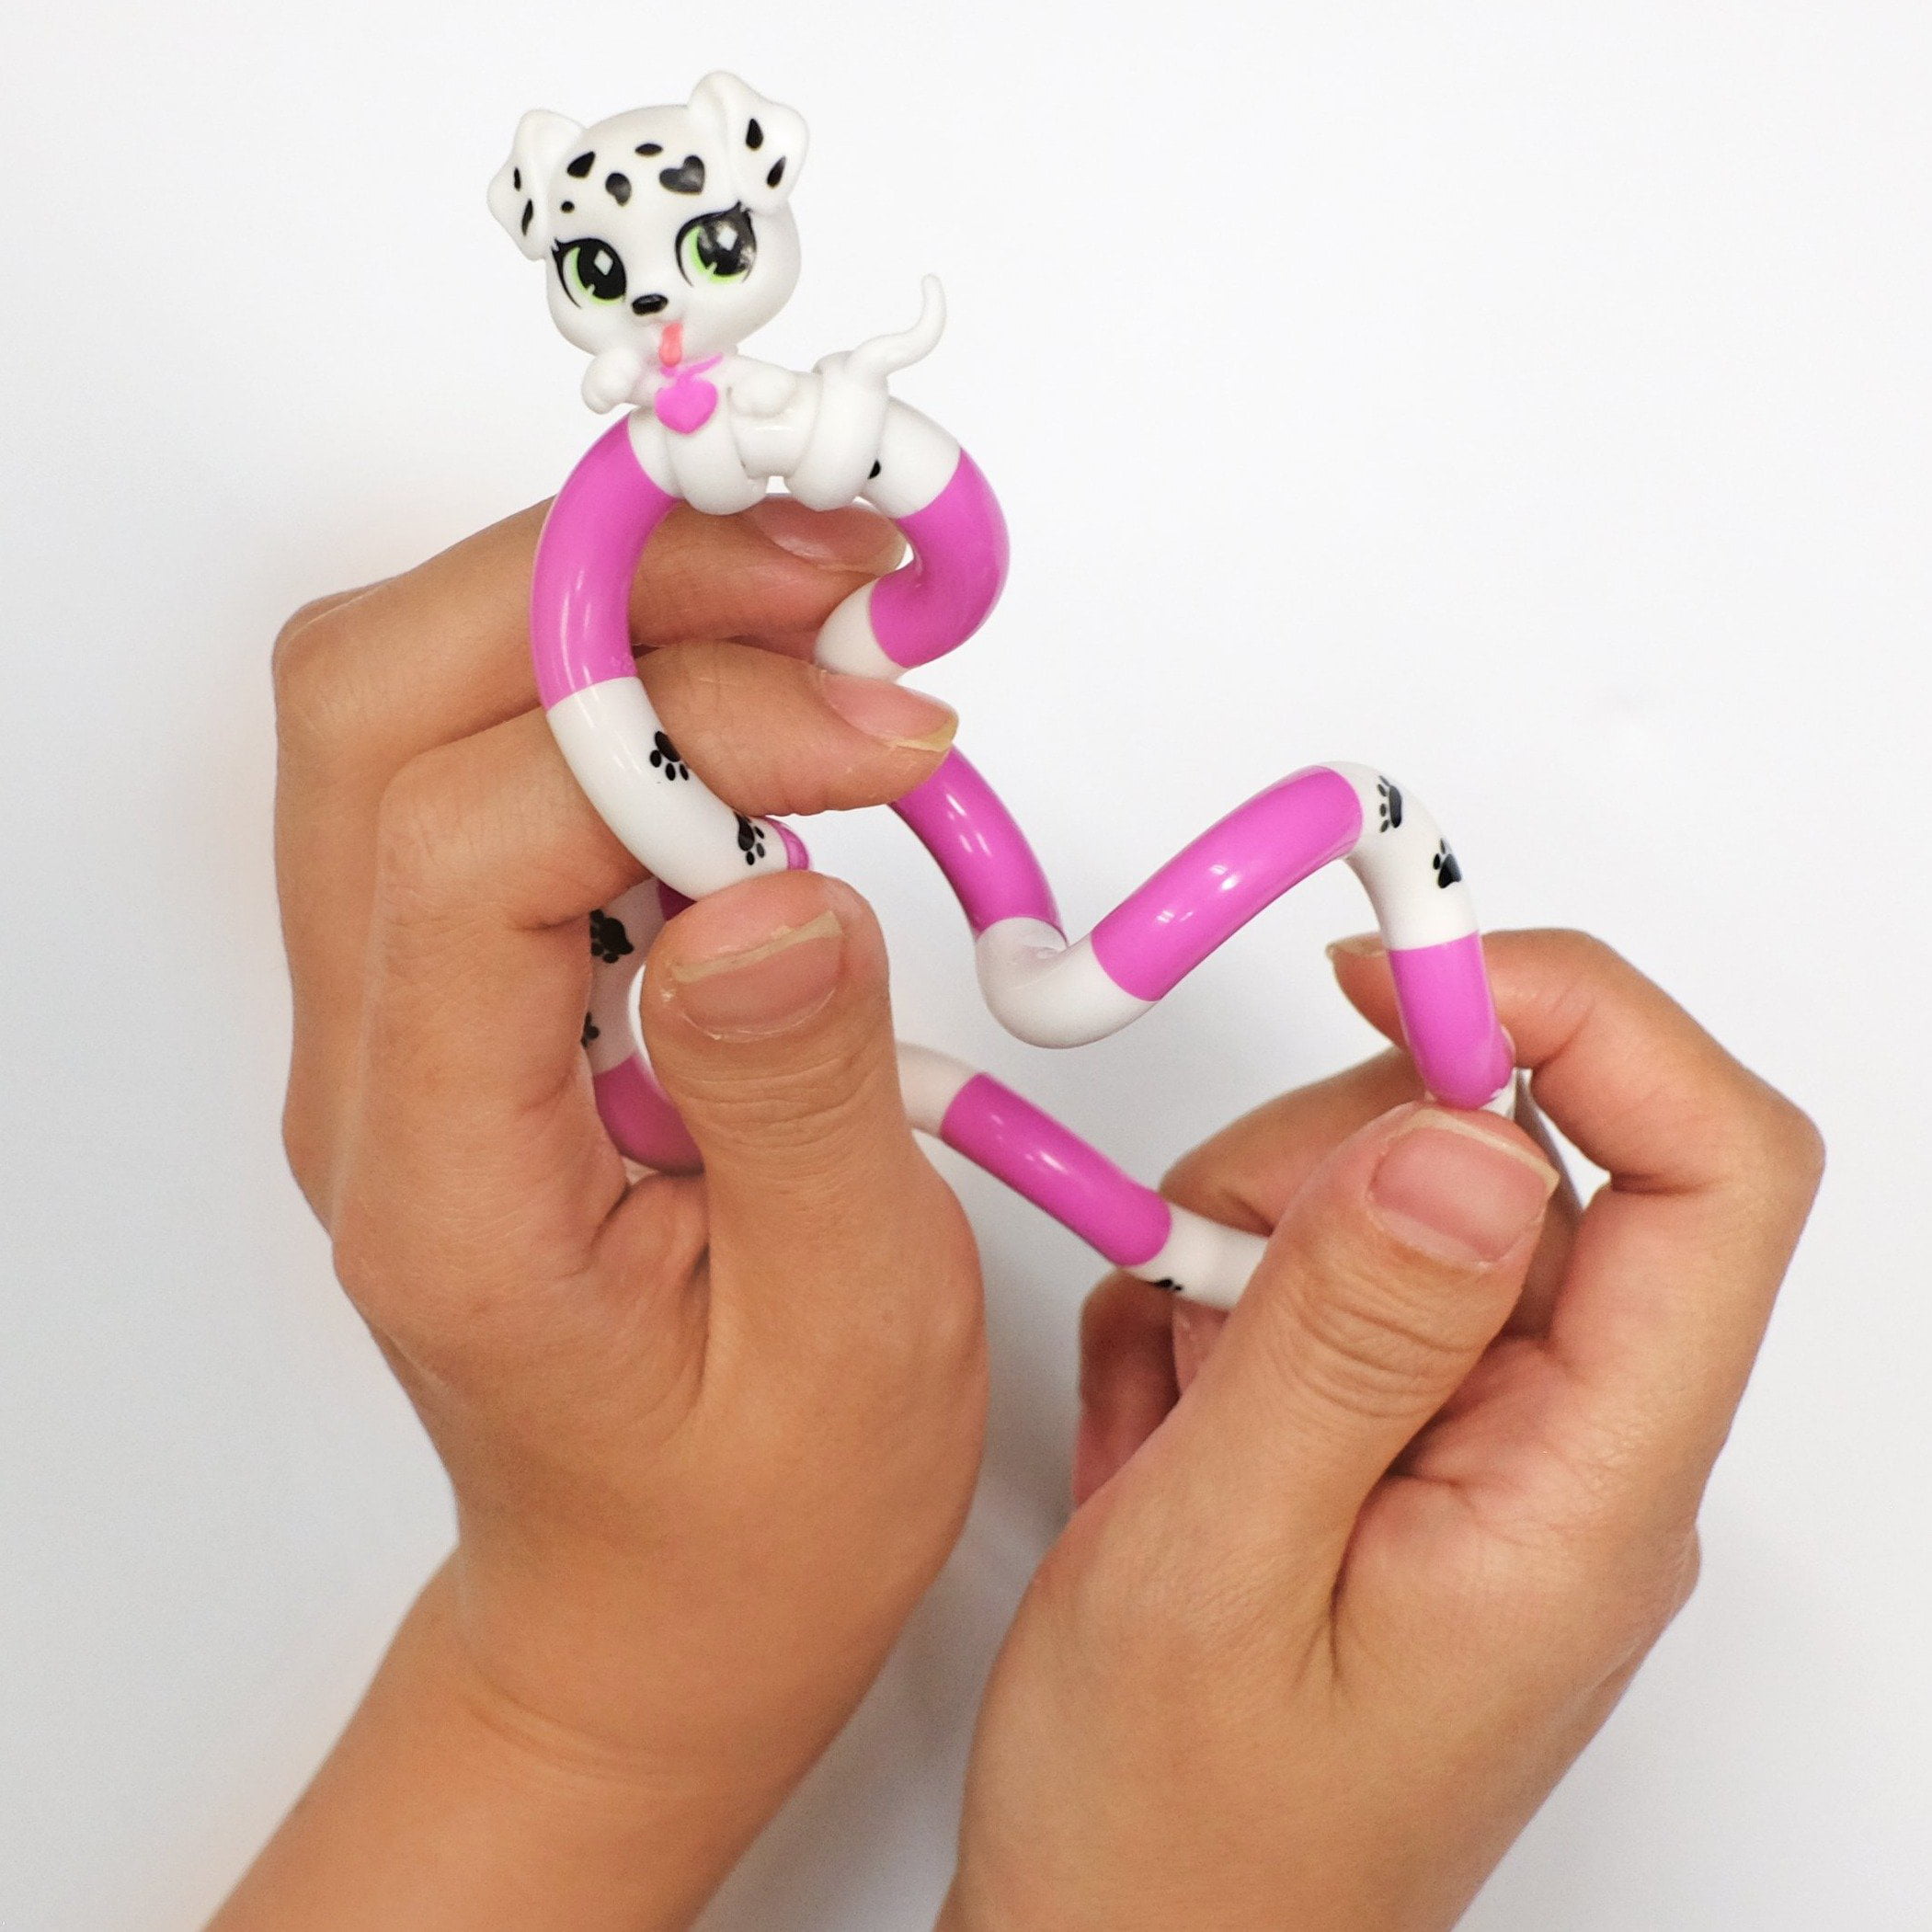 Original Toy Company Wooden Thumb Puppet Fidget Finger Toy--Pink Flamingo NEW 